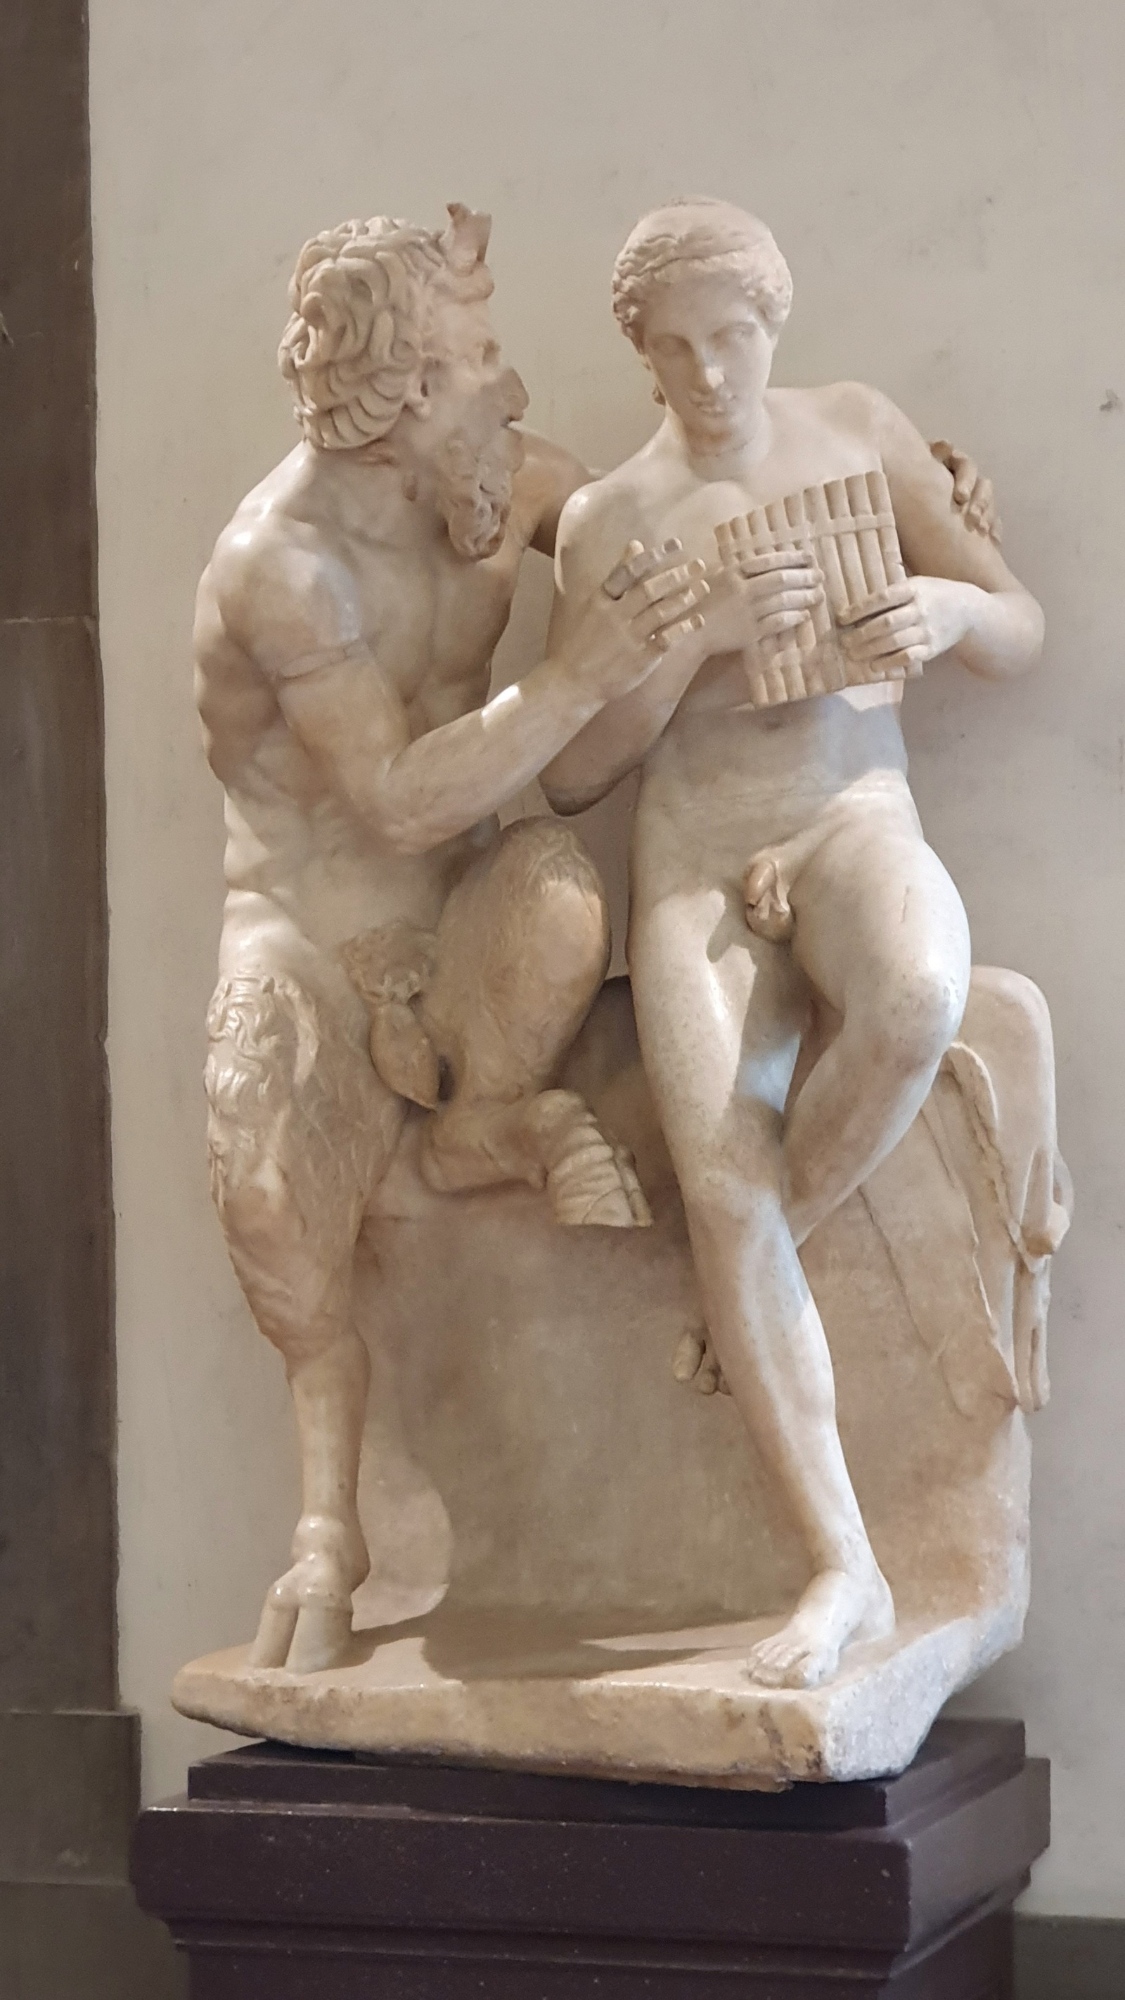 Pan and Daphnis at the Uffizi